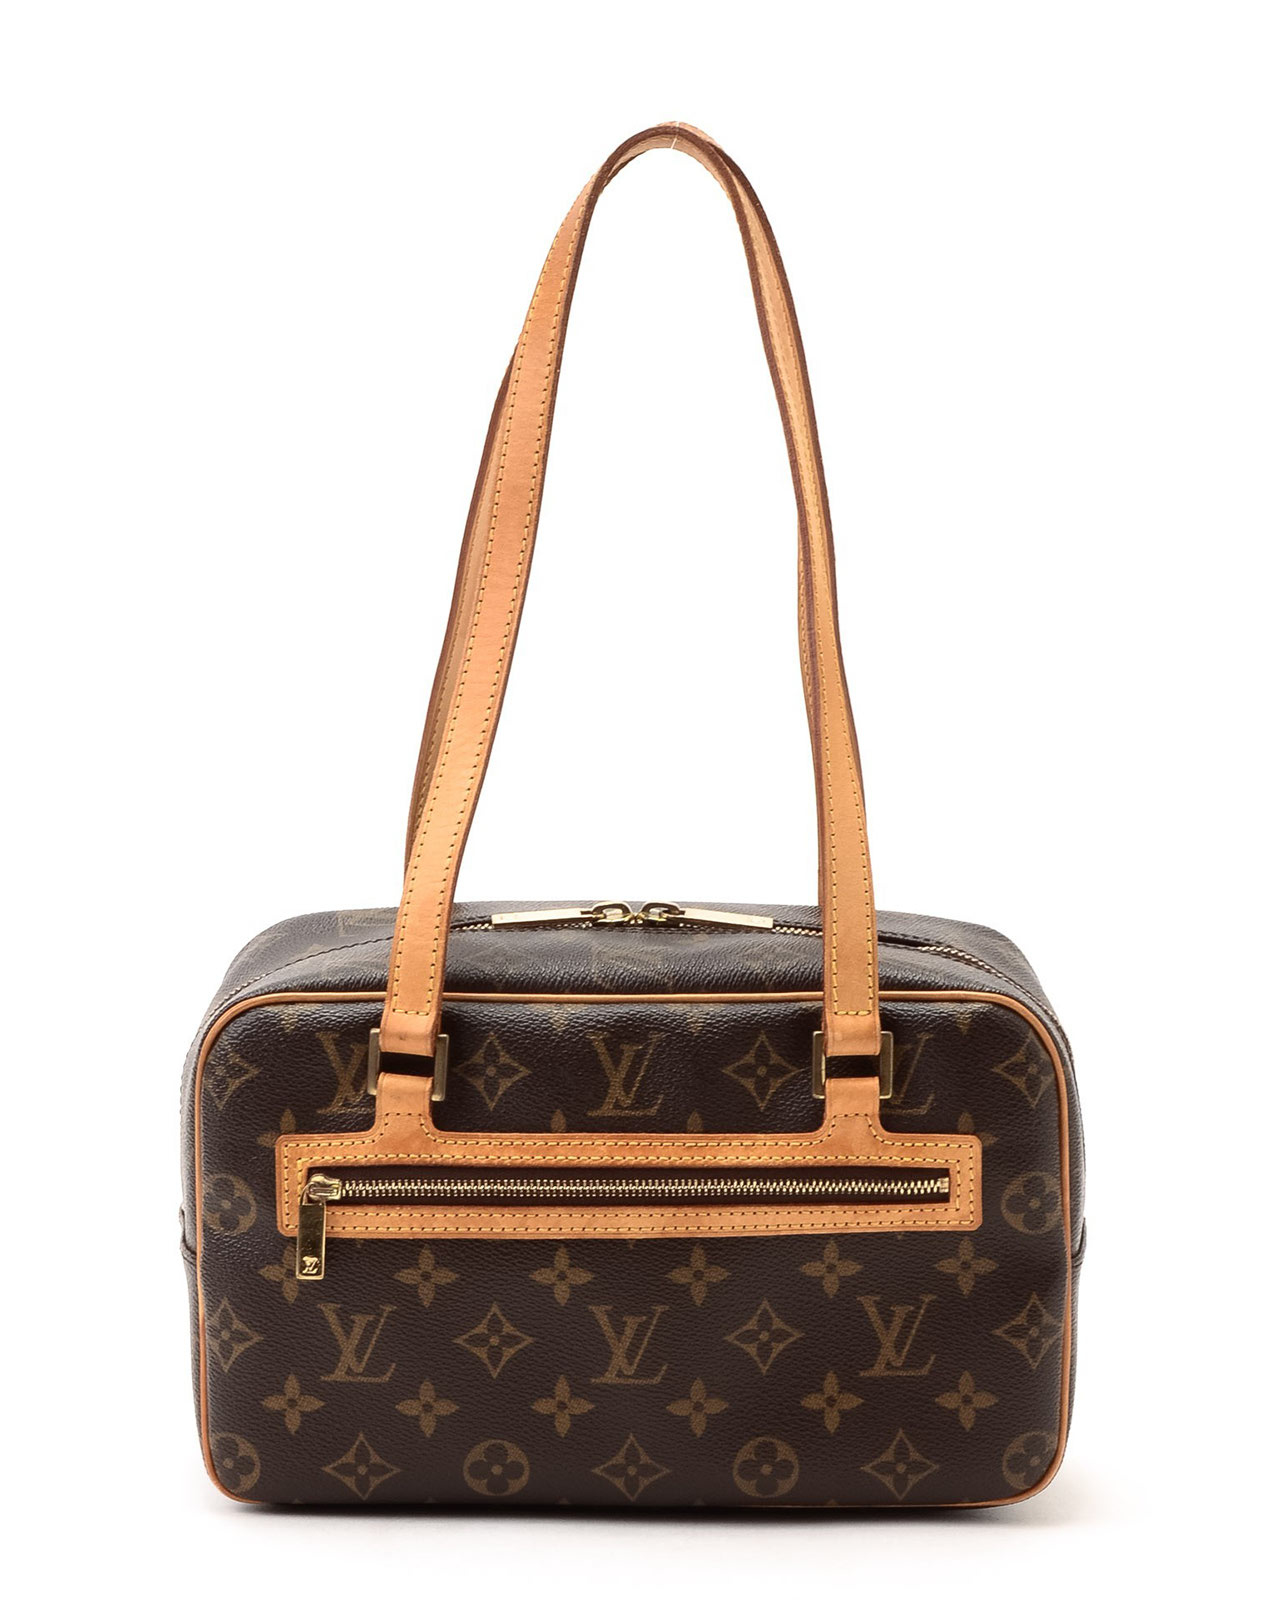 Lyst - Louis Vuitton Cite Mm Shoulder Bag in Brown